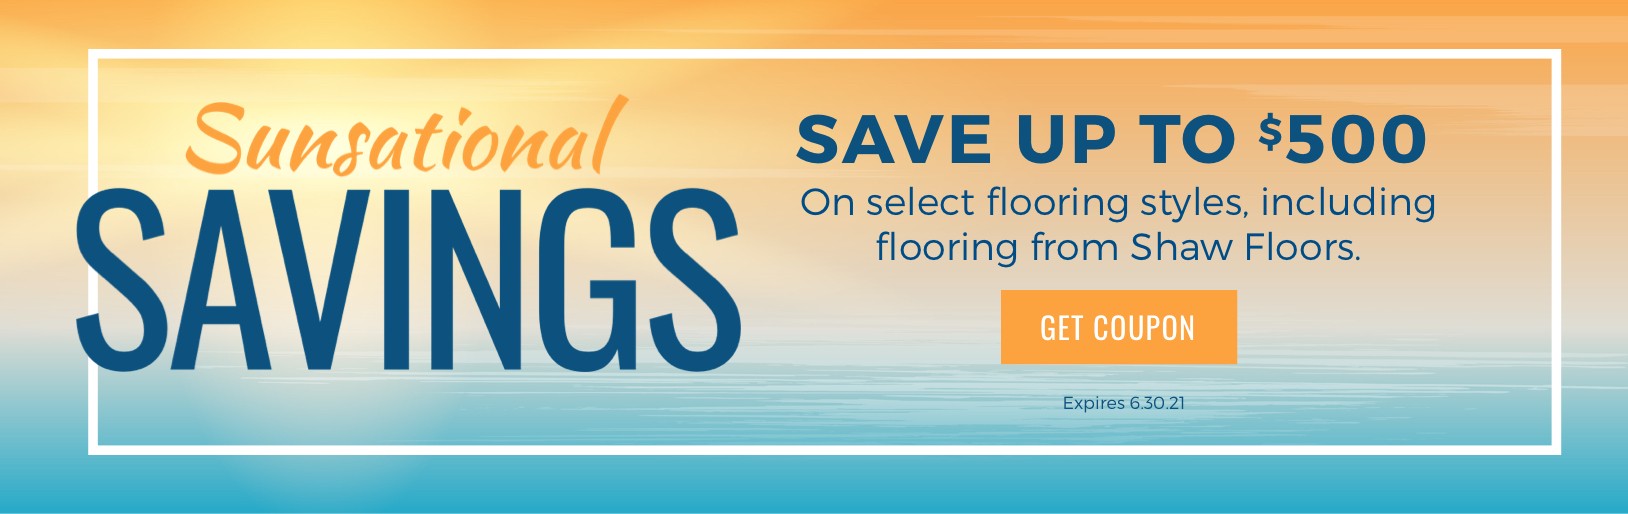 Sunsational Savings Sale | Budget Flooring, Inc.